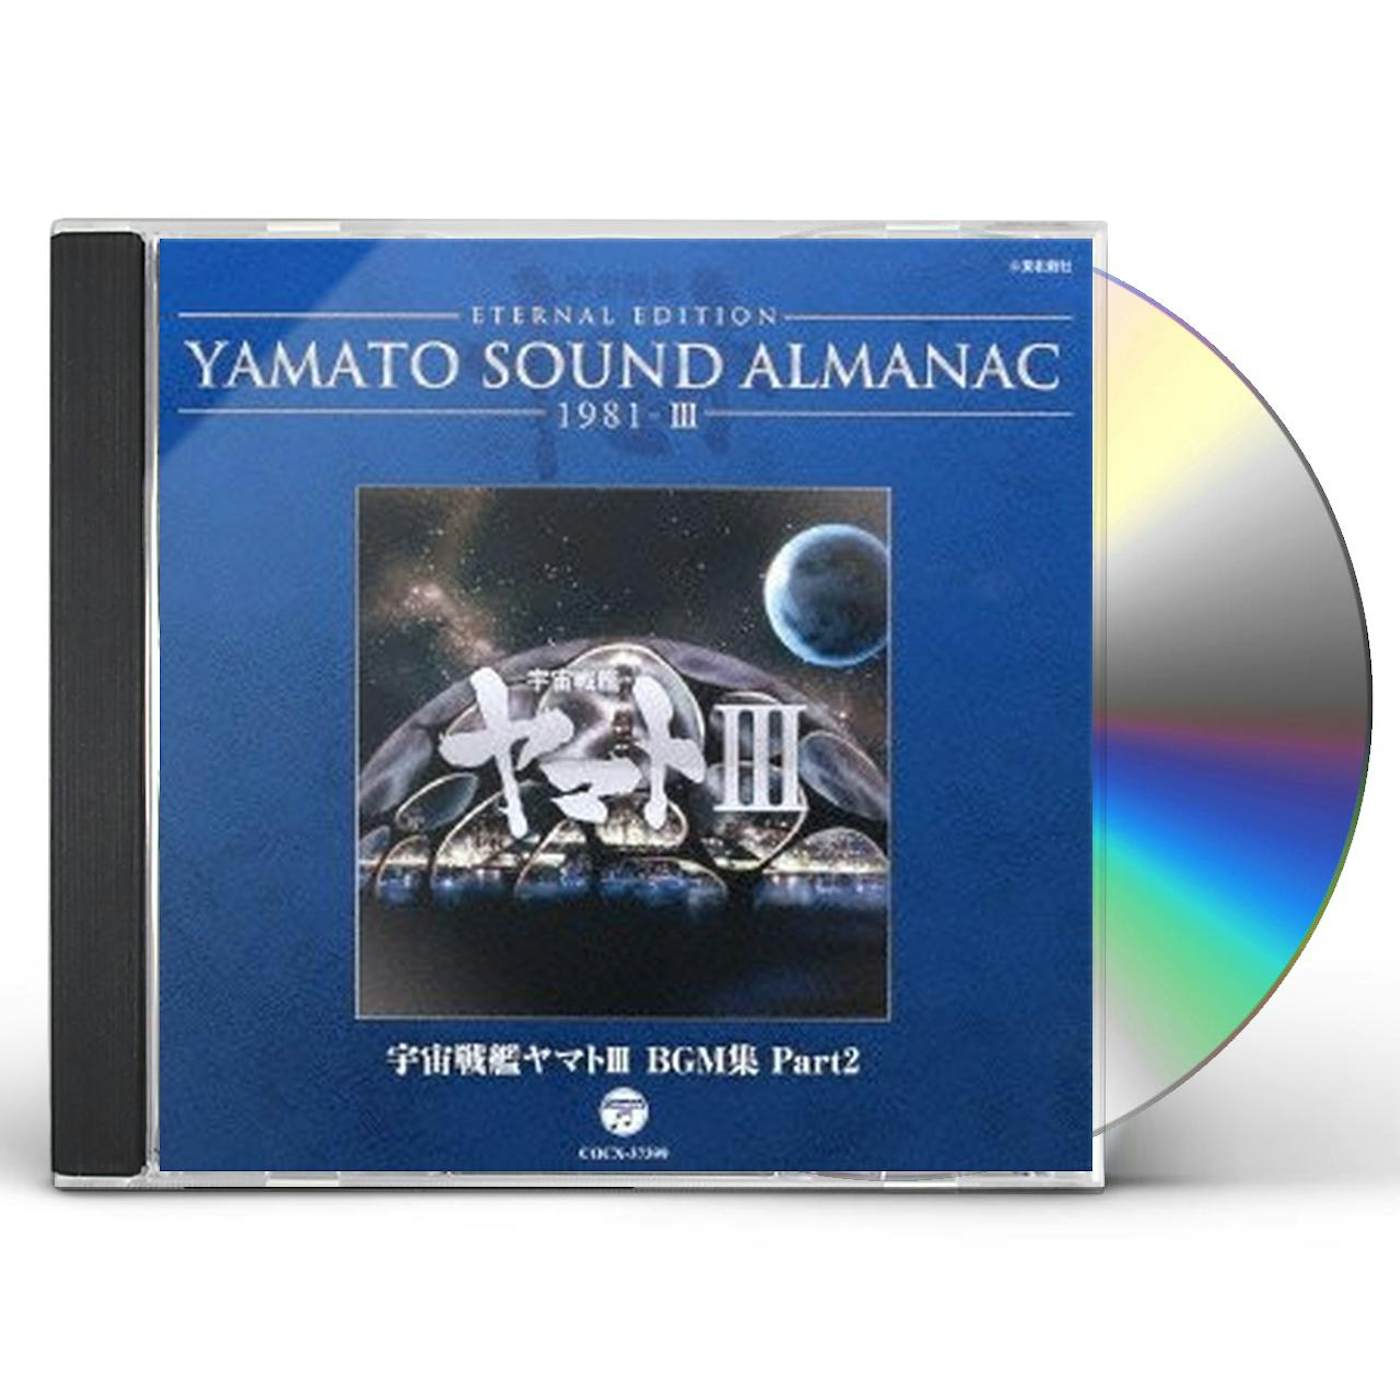 Animation ETERNAL EDITION YAMATO SOUND ALMANAC 1981-3 UCHUU CD